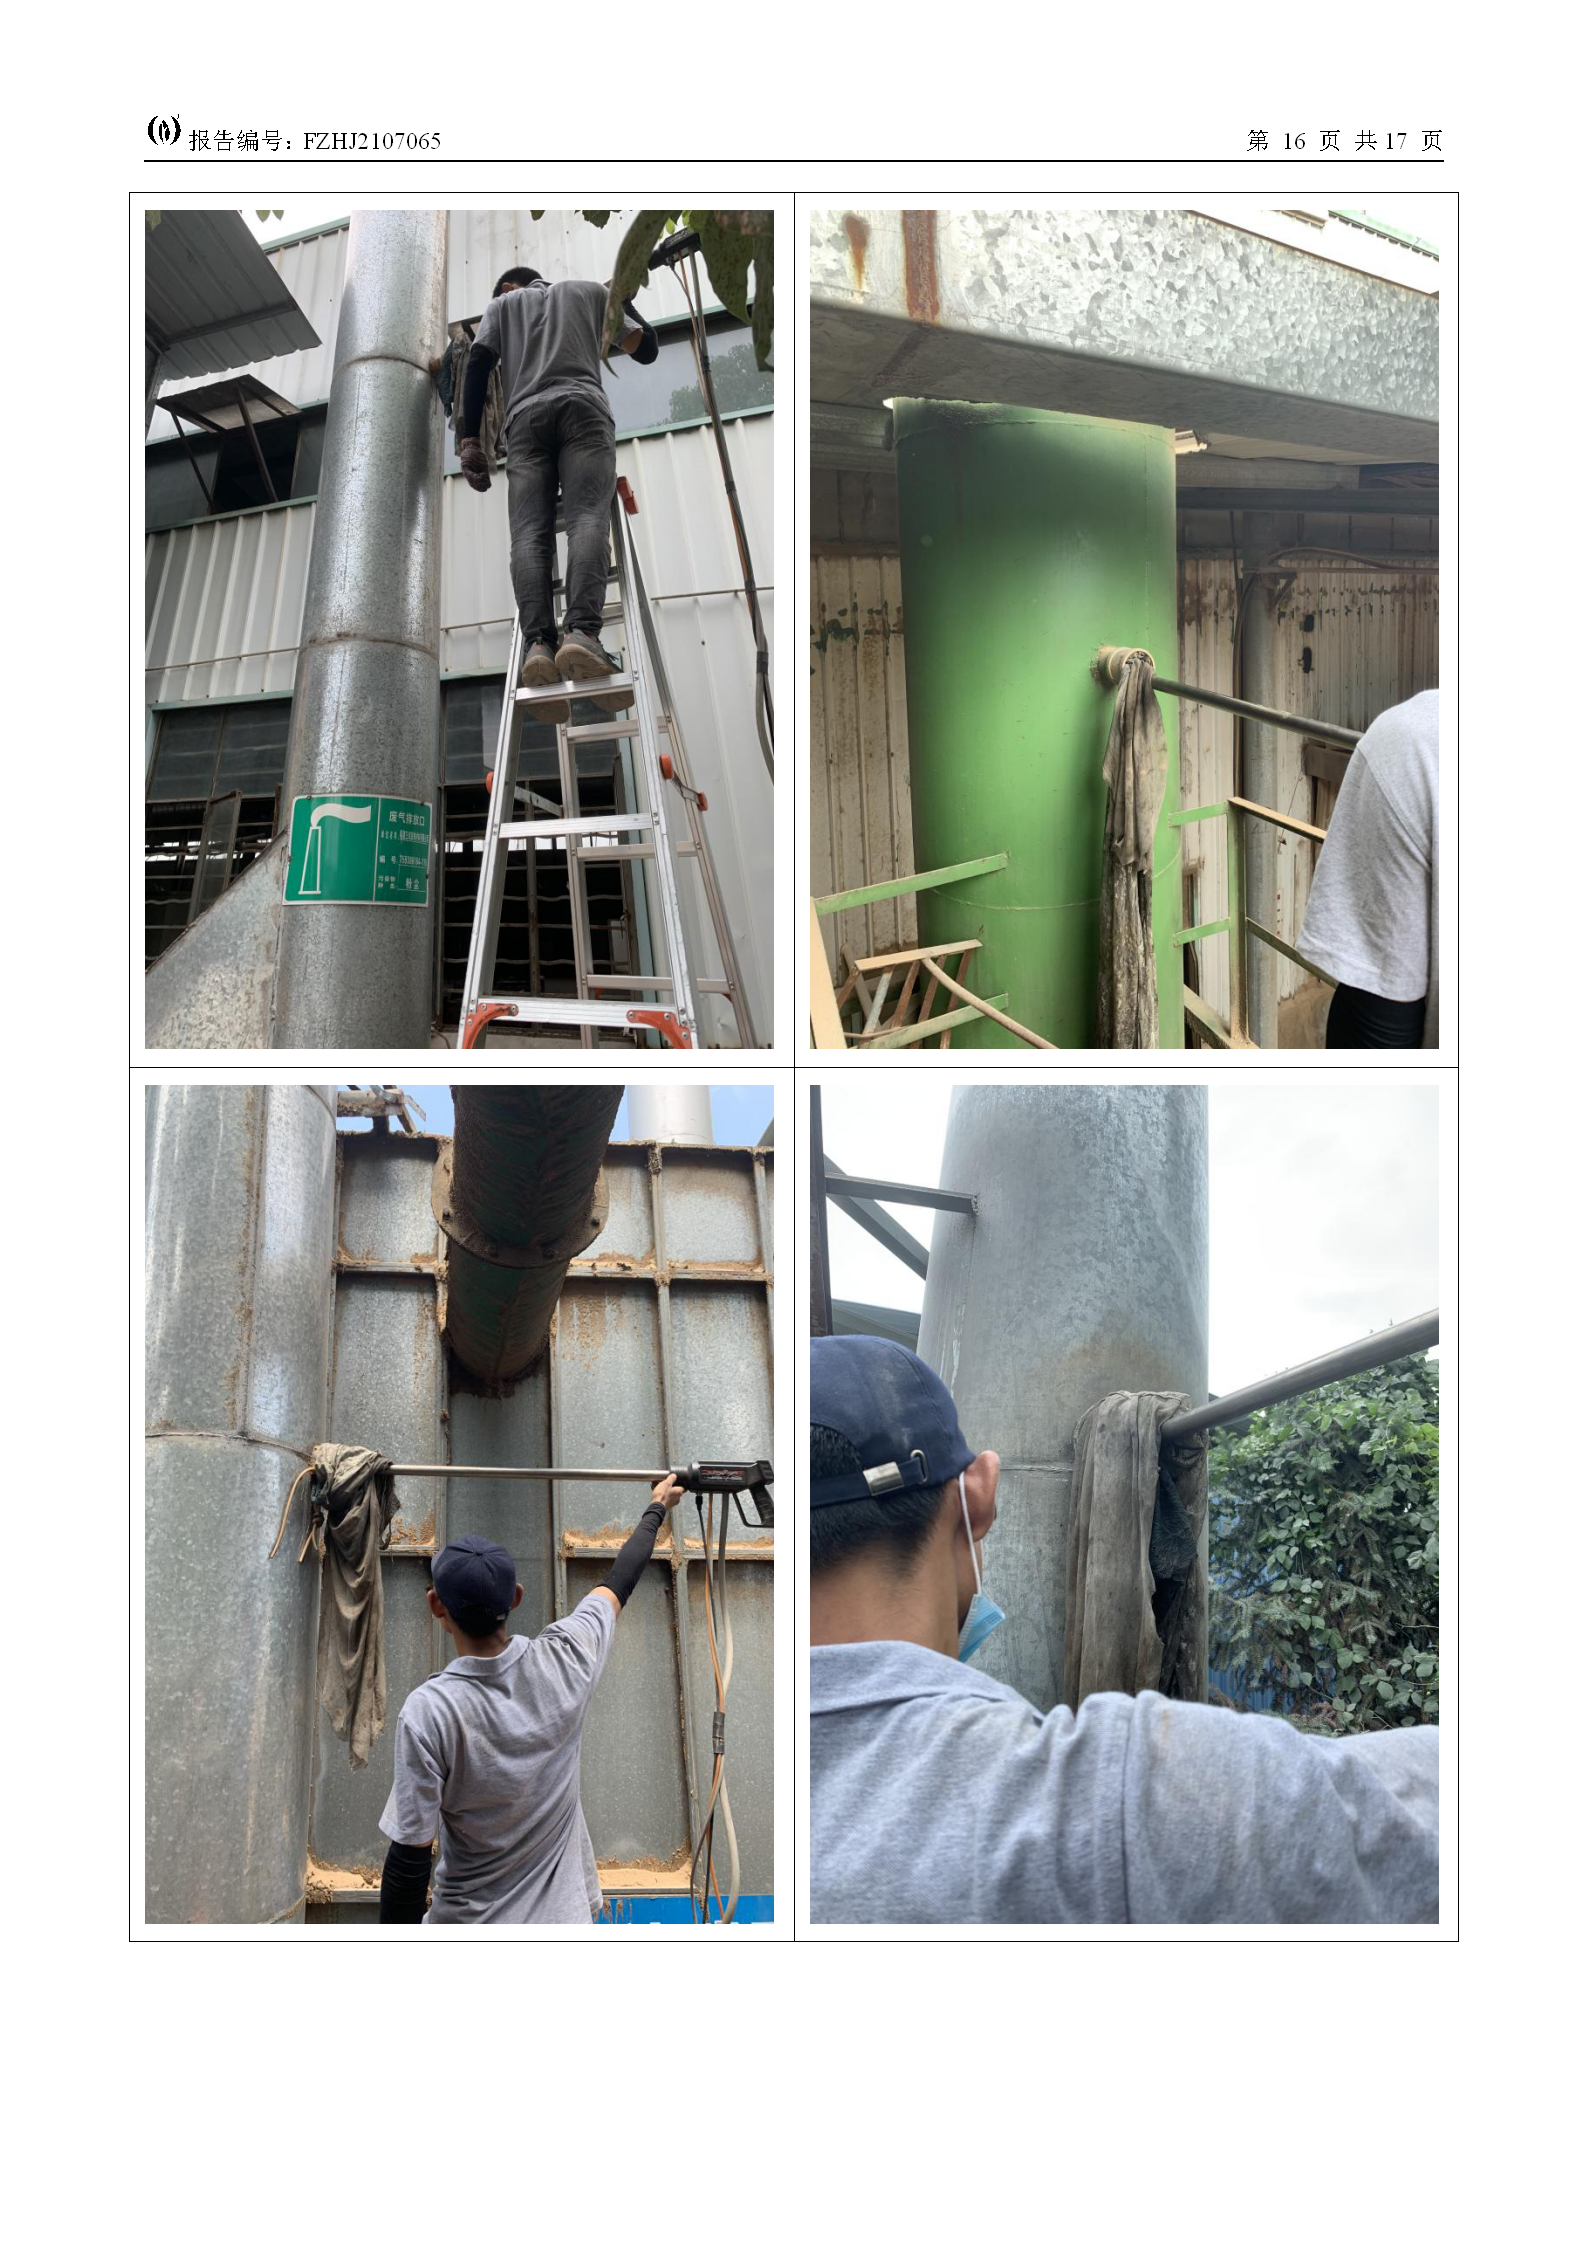 FZHJ2107065福建王斌装饰材料有限公司（2021年7月份）环境检测(1)_18.png